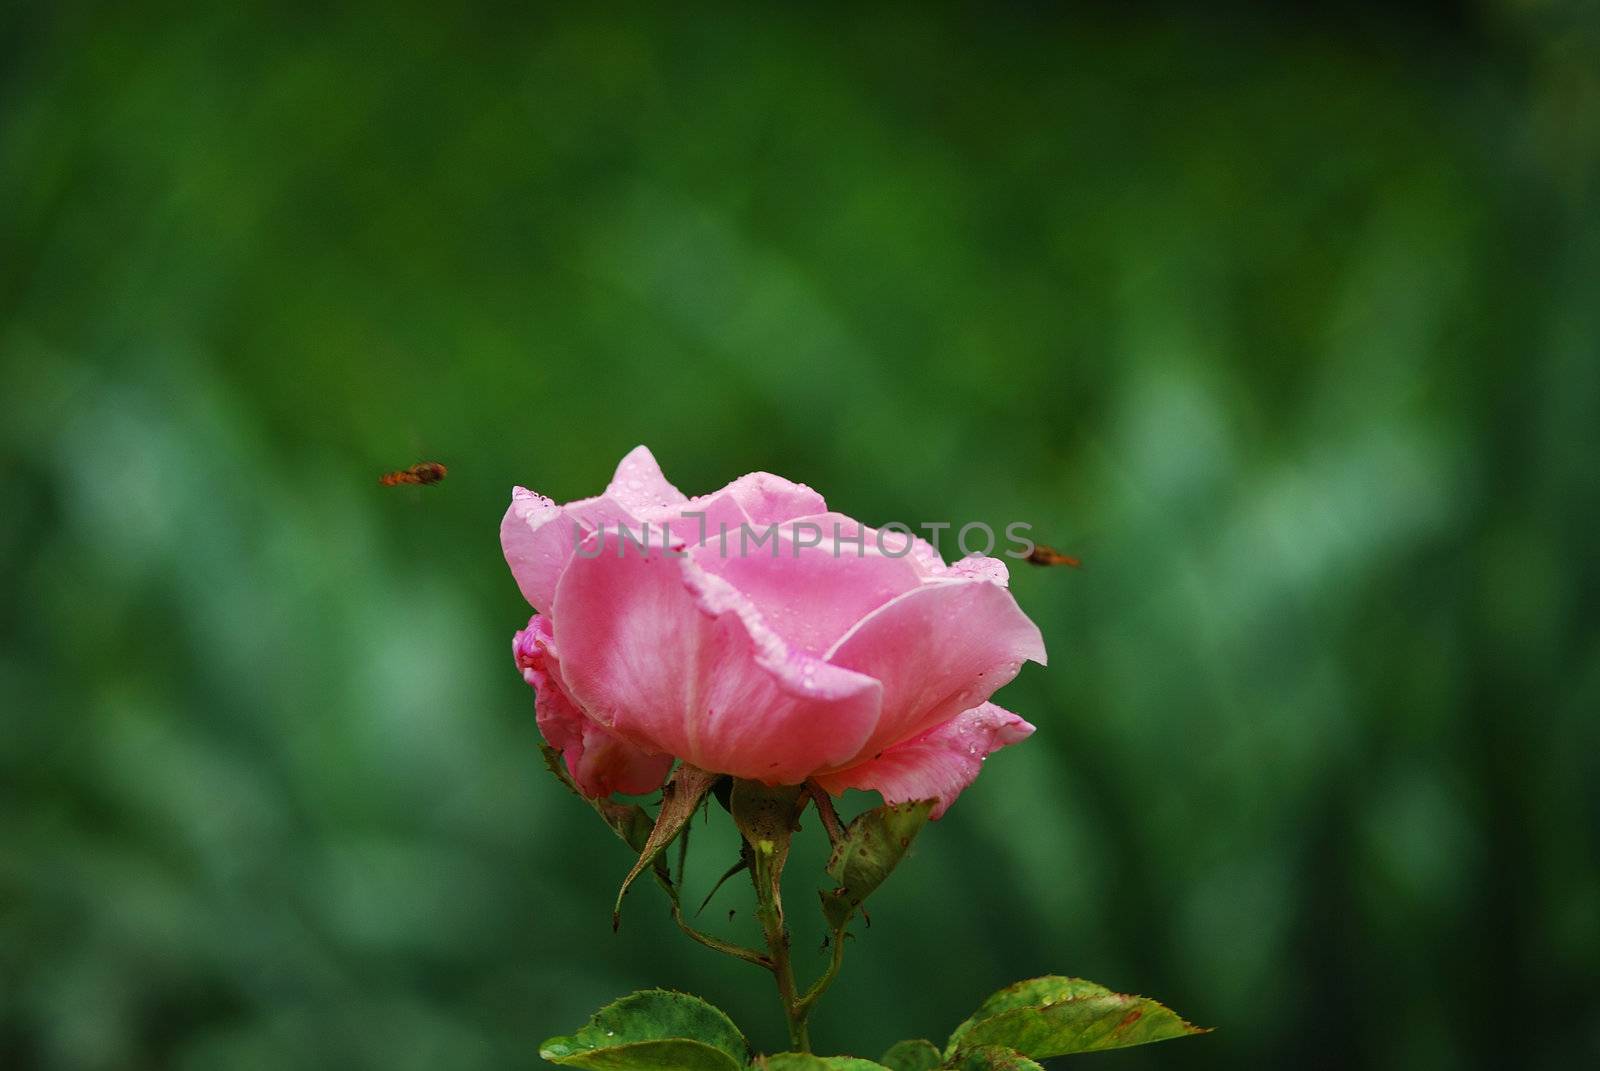 roses by verbano